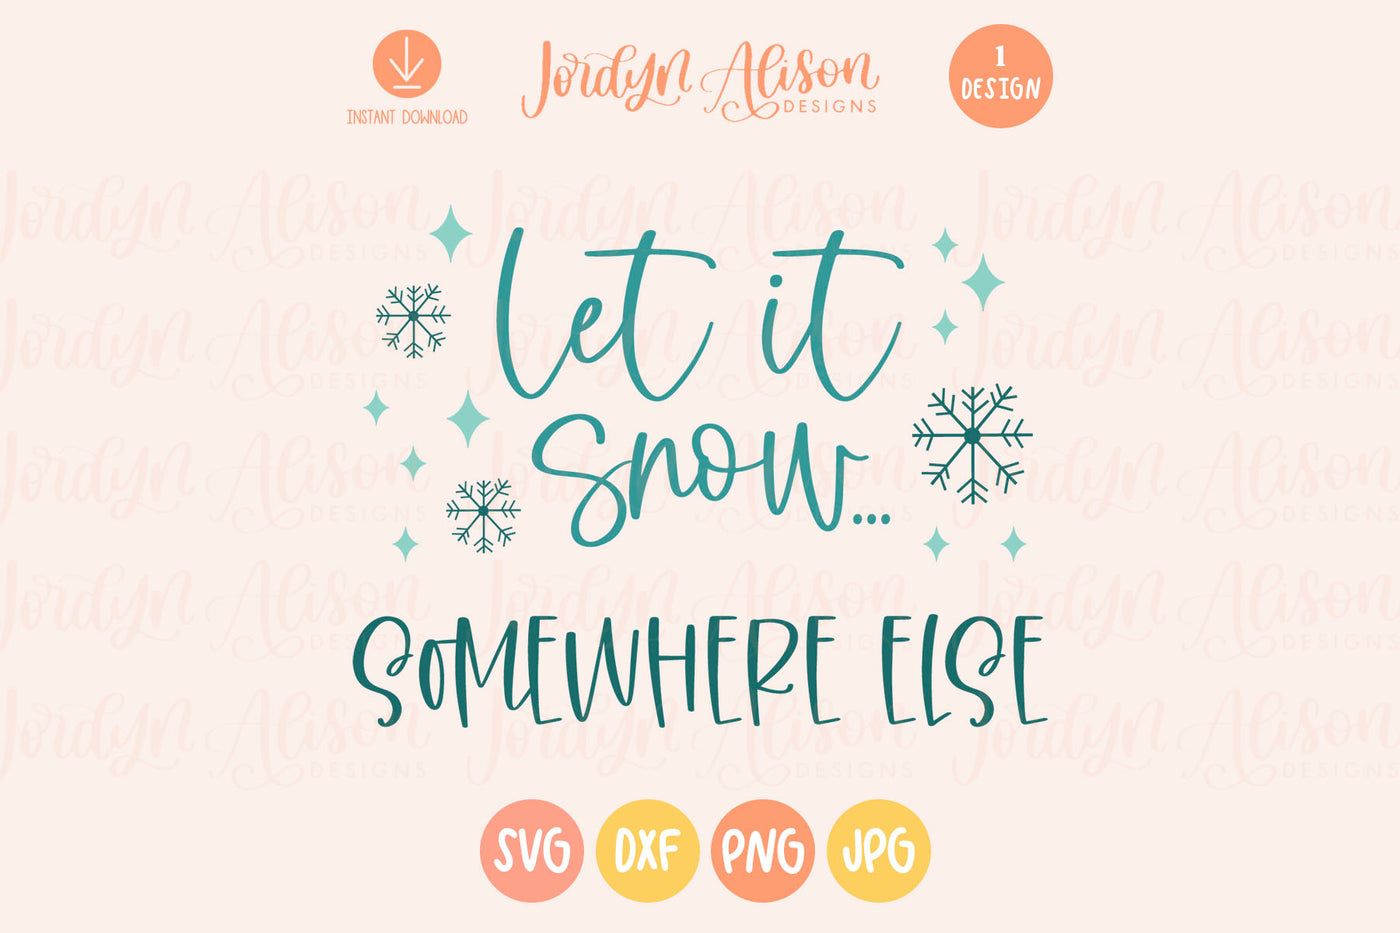 Let It Snow Somewhere Else SVG